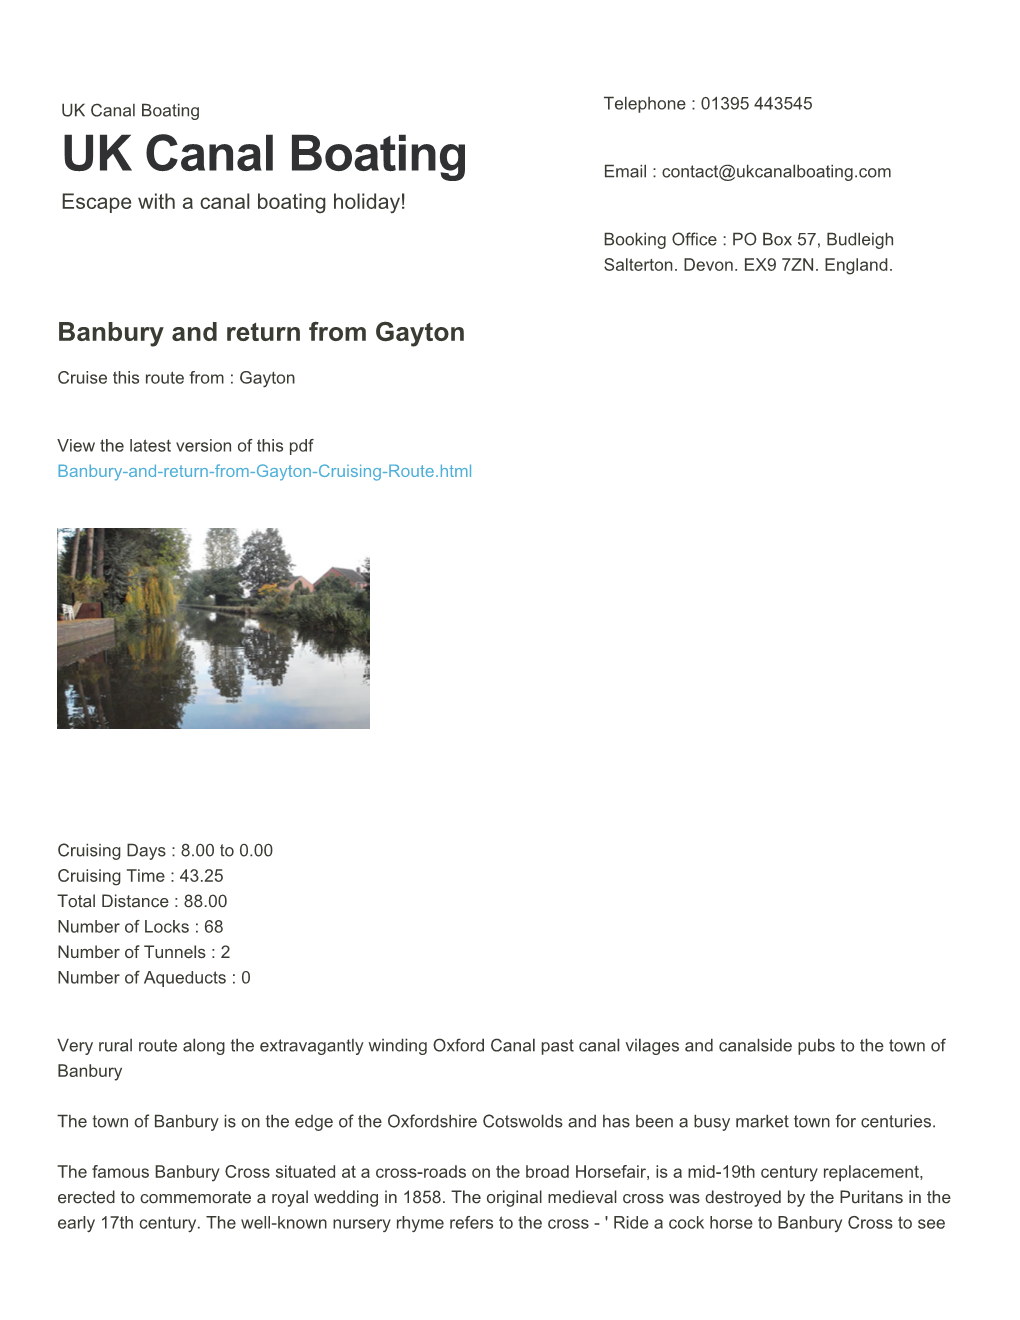 Banbury and Return from Gayton | UK Canal Boating